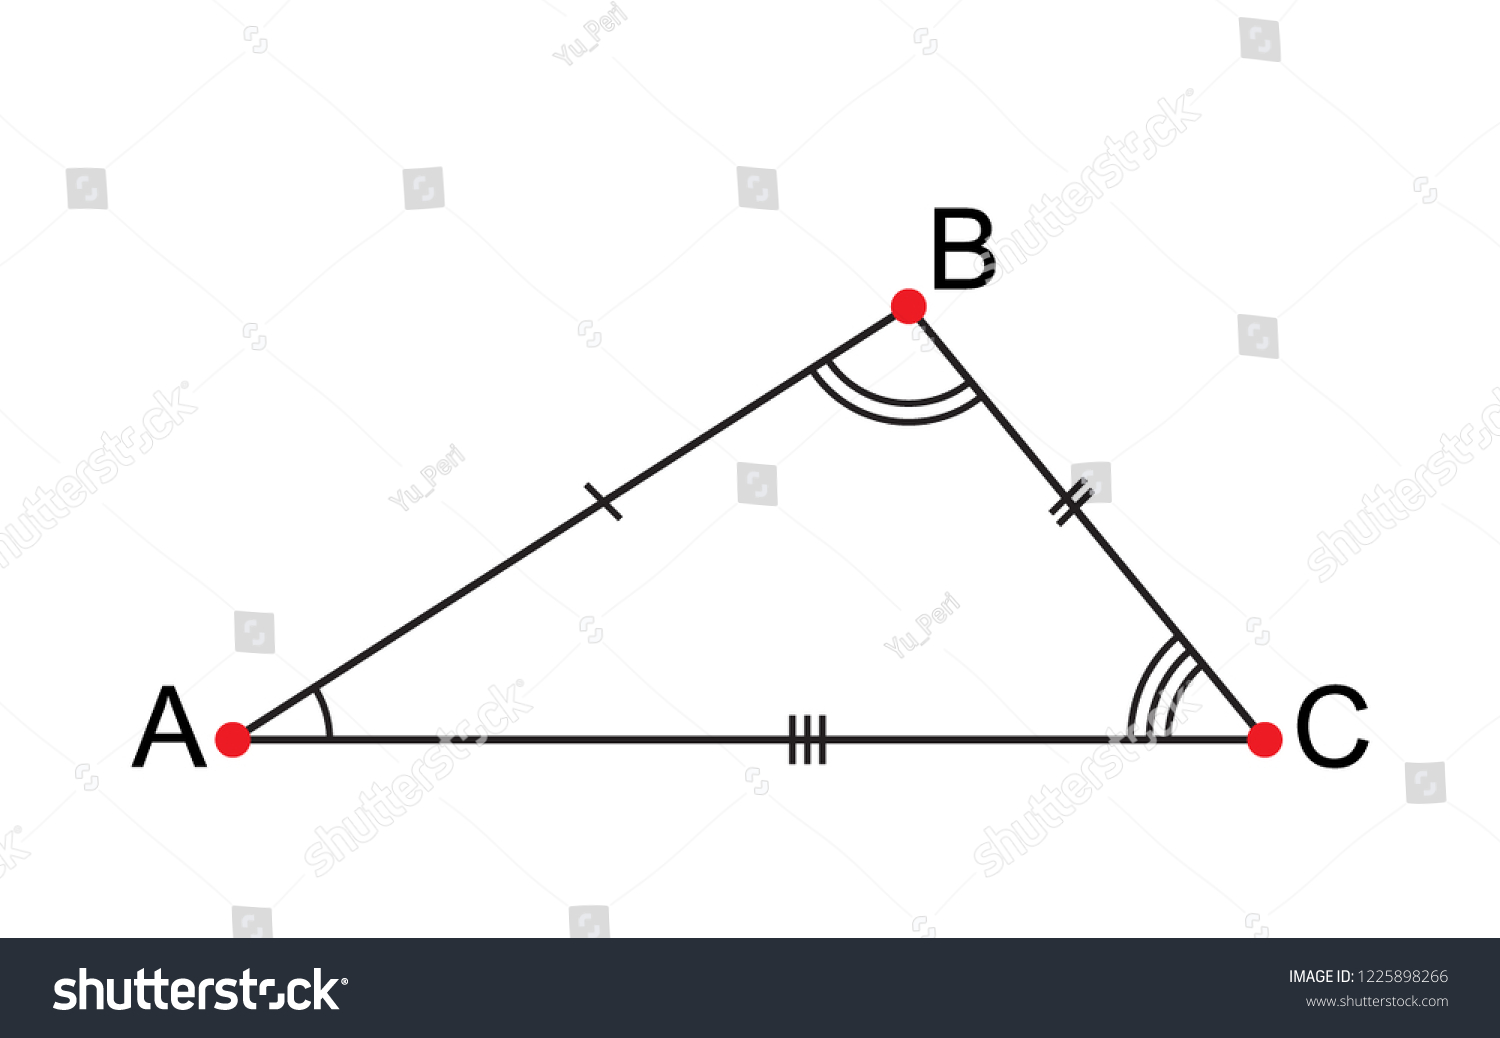 Obtuse Scalene Triangle Abc Isolated On Image Vectorielle De Stock Libre De Droits 1225898266 9066